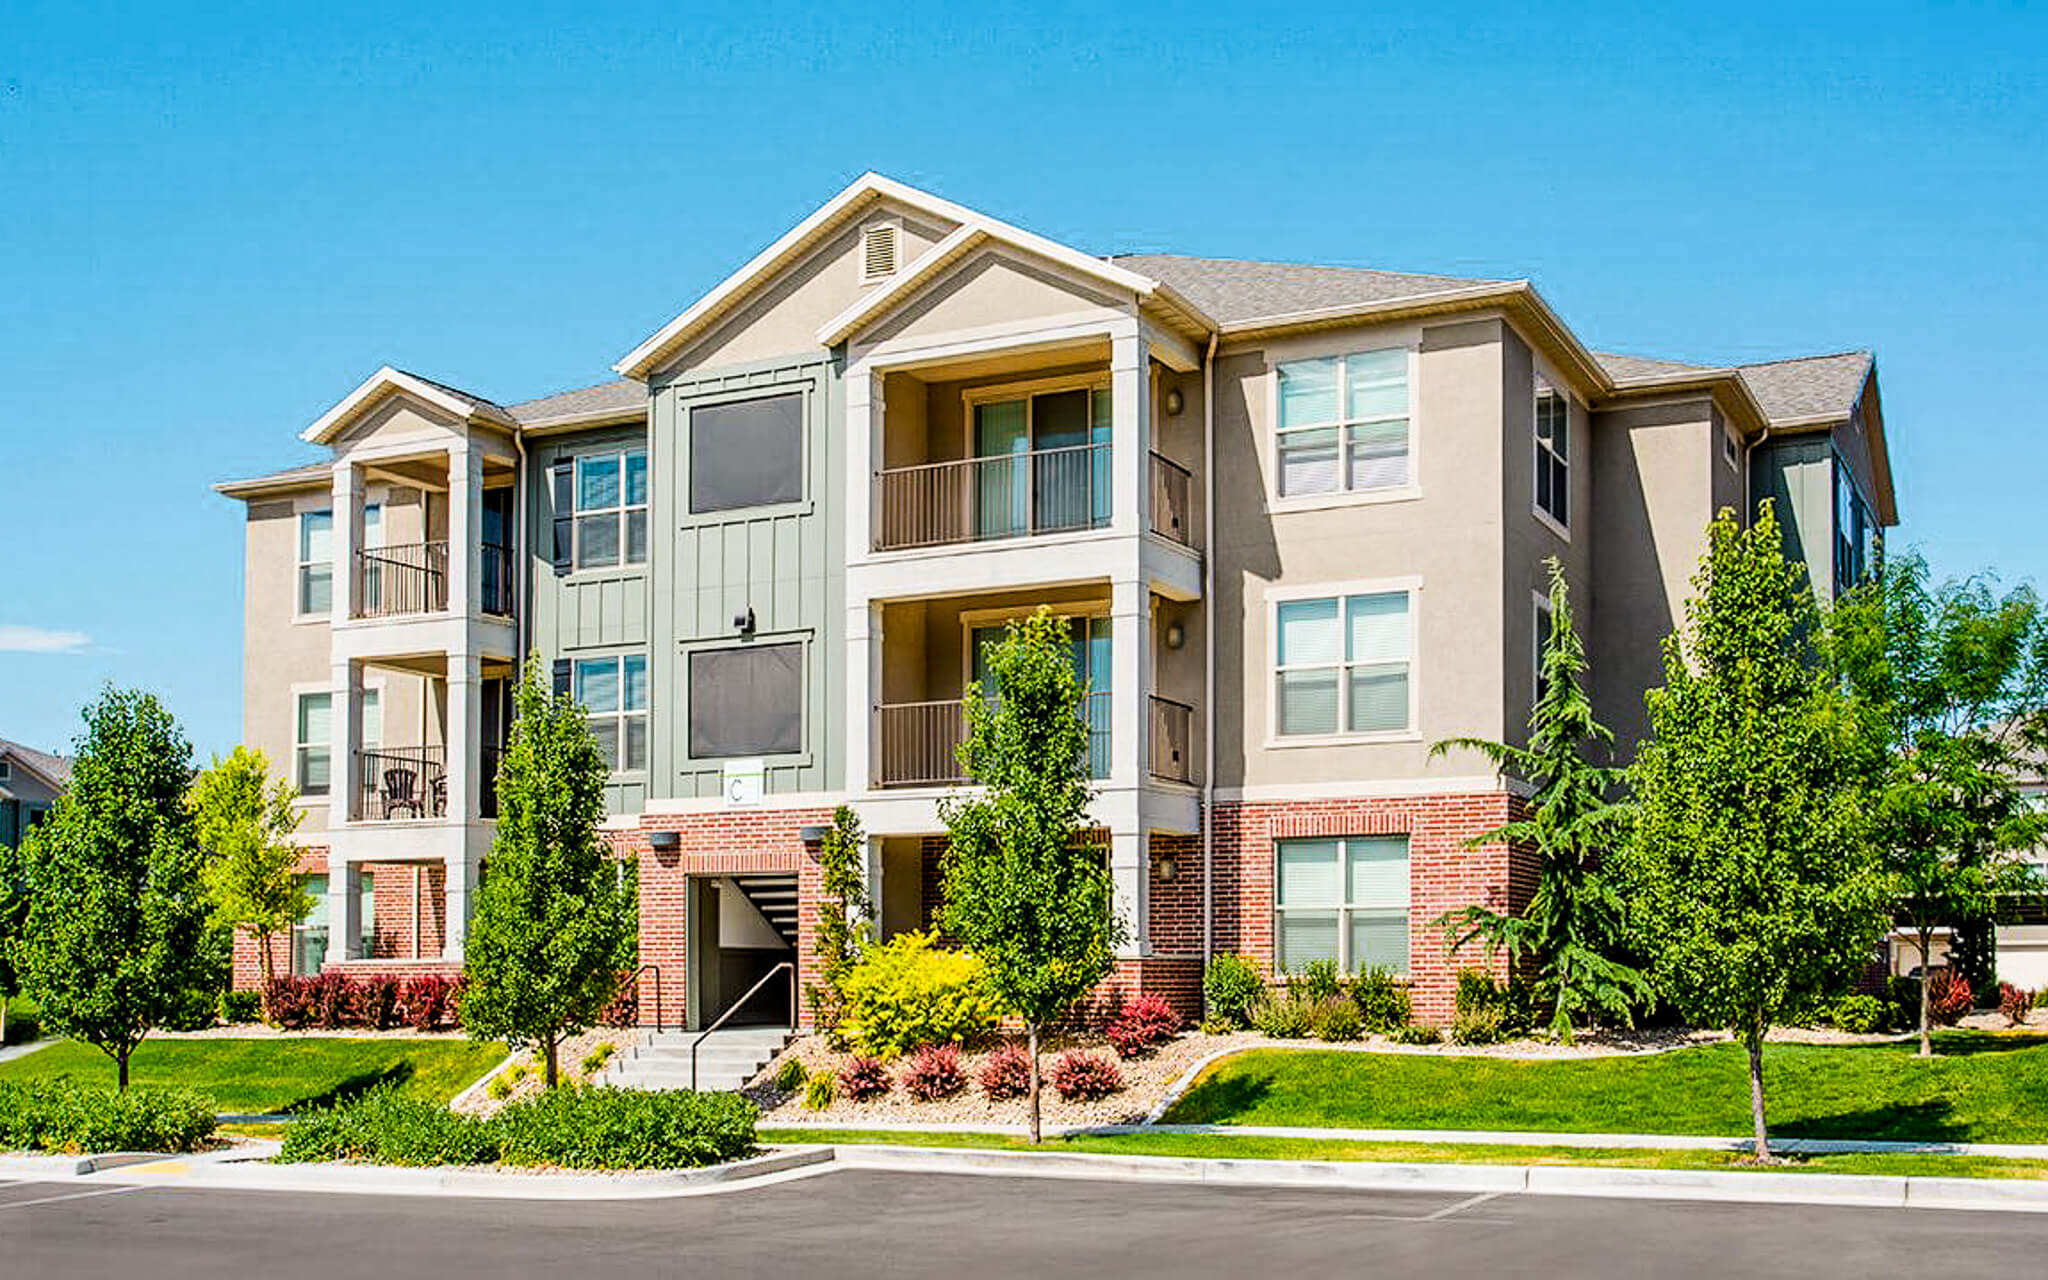 Paragon Corporate Housing - ICO Mayfield Apartments - Pleasant Grove Utah